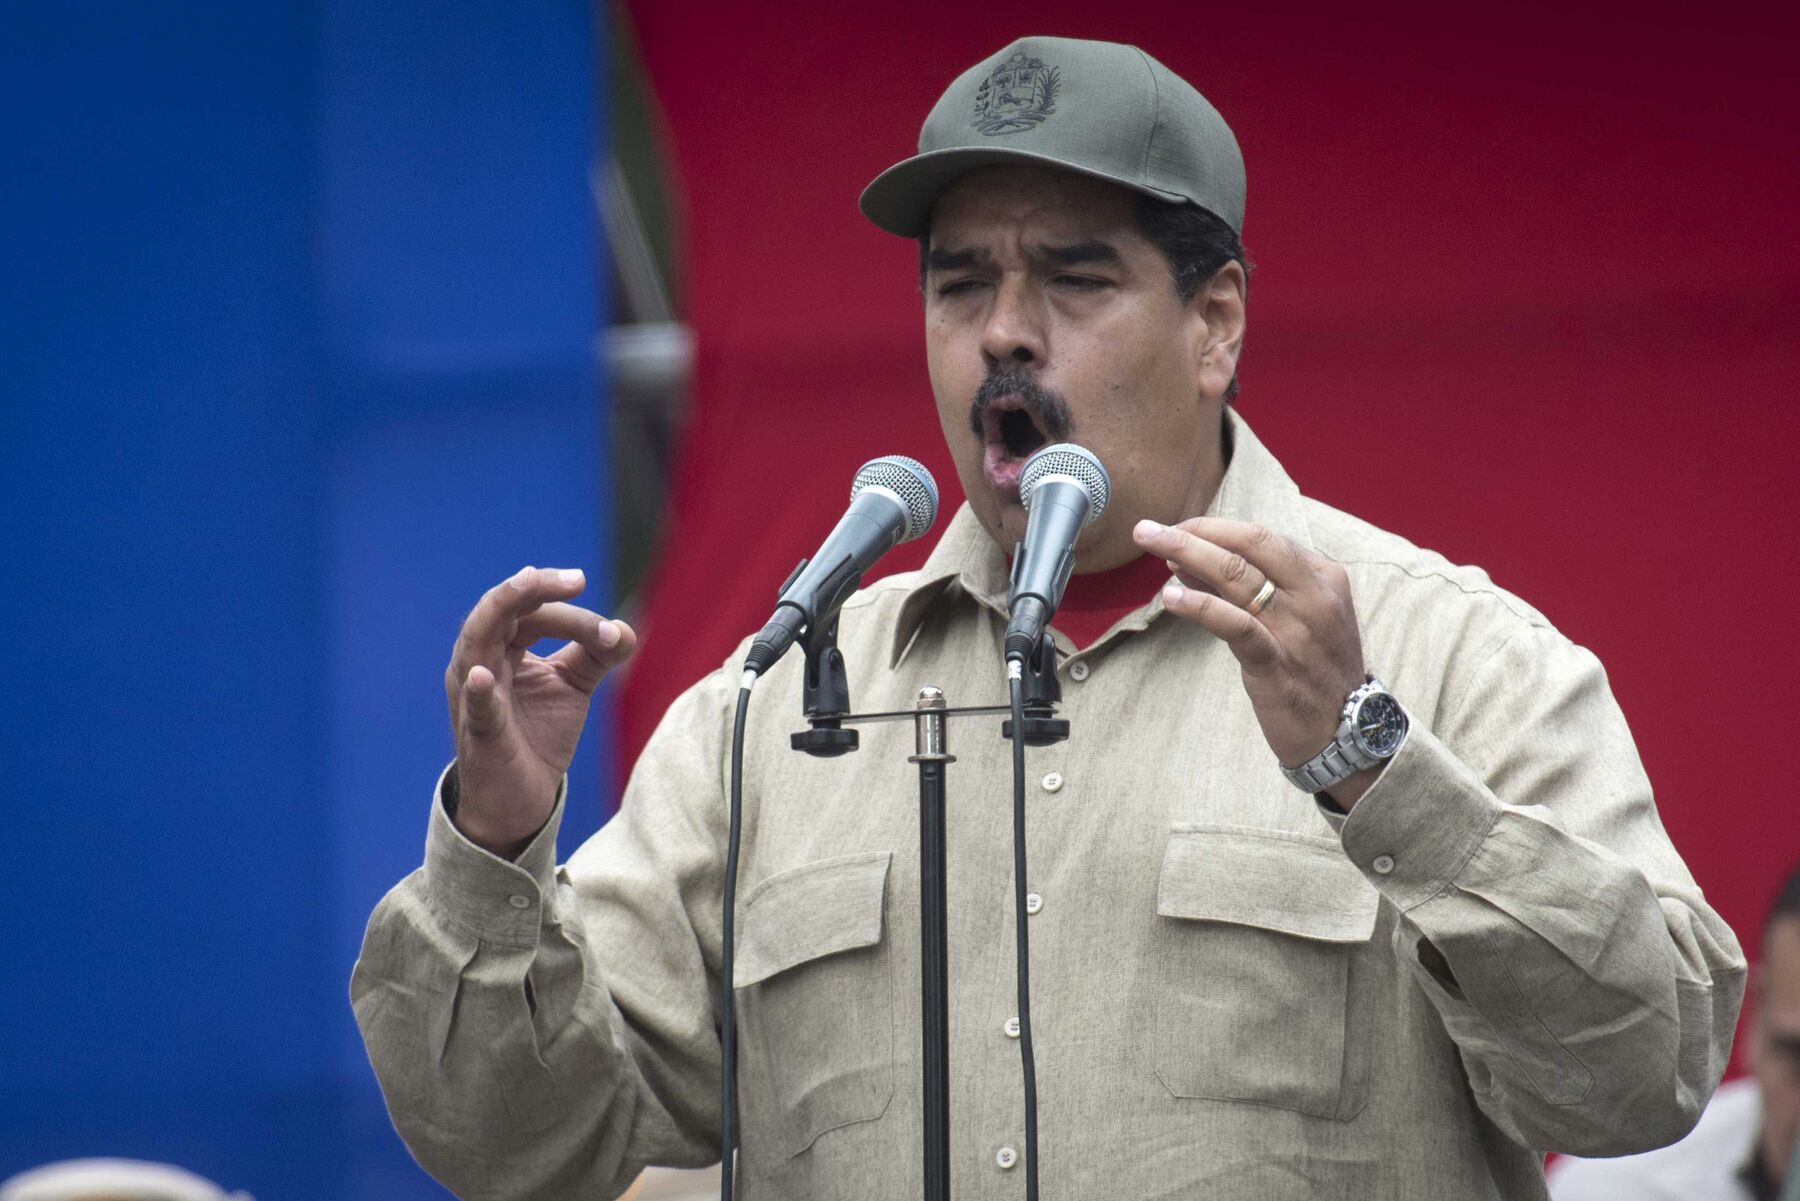 Nicolas Maduro, president of Venezuela, speaks during a ceremony with Militia members in Caracas, Venezuela, on April 17. Photographer: Carlos Becerra/Bloomberg